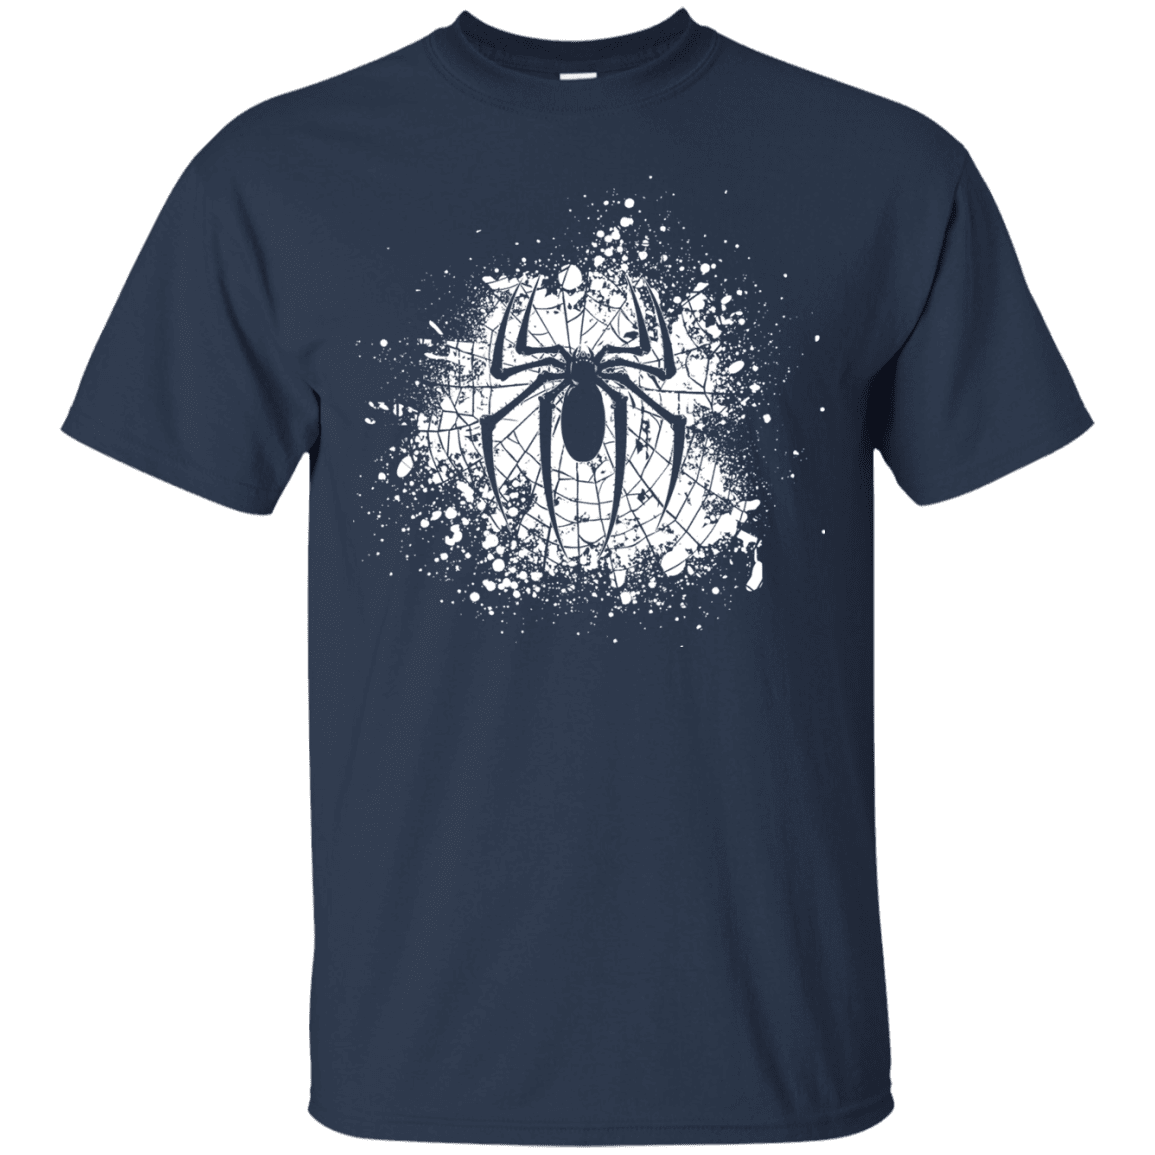 T-Shirts Navy / S Arachnophobia T-Shirt